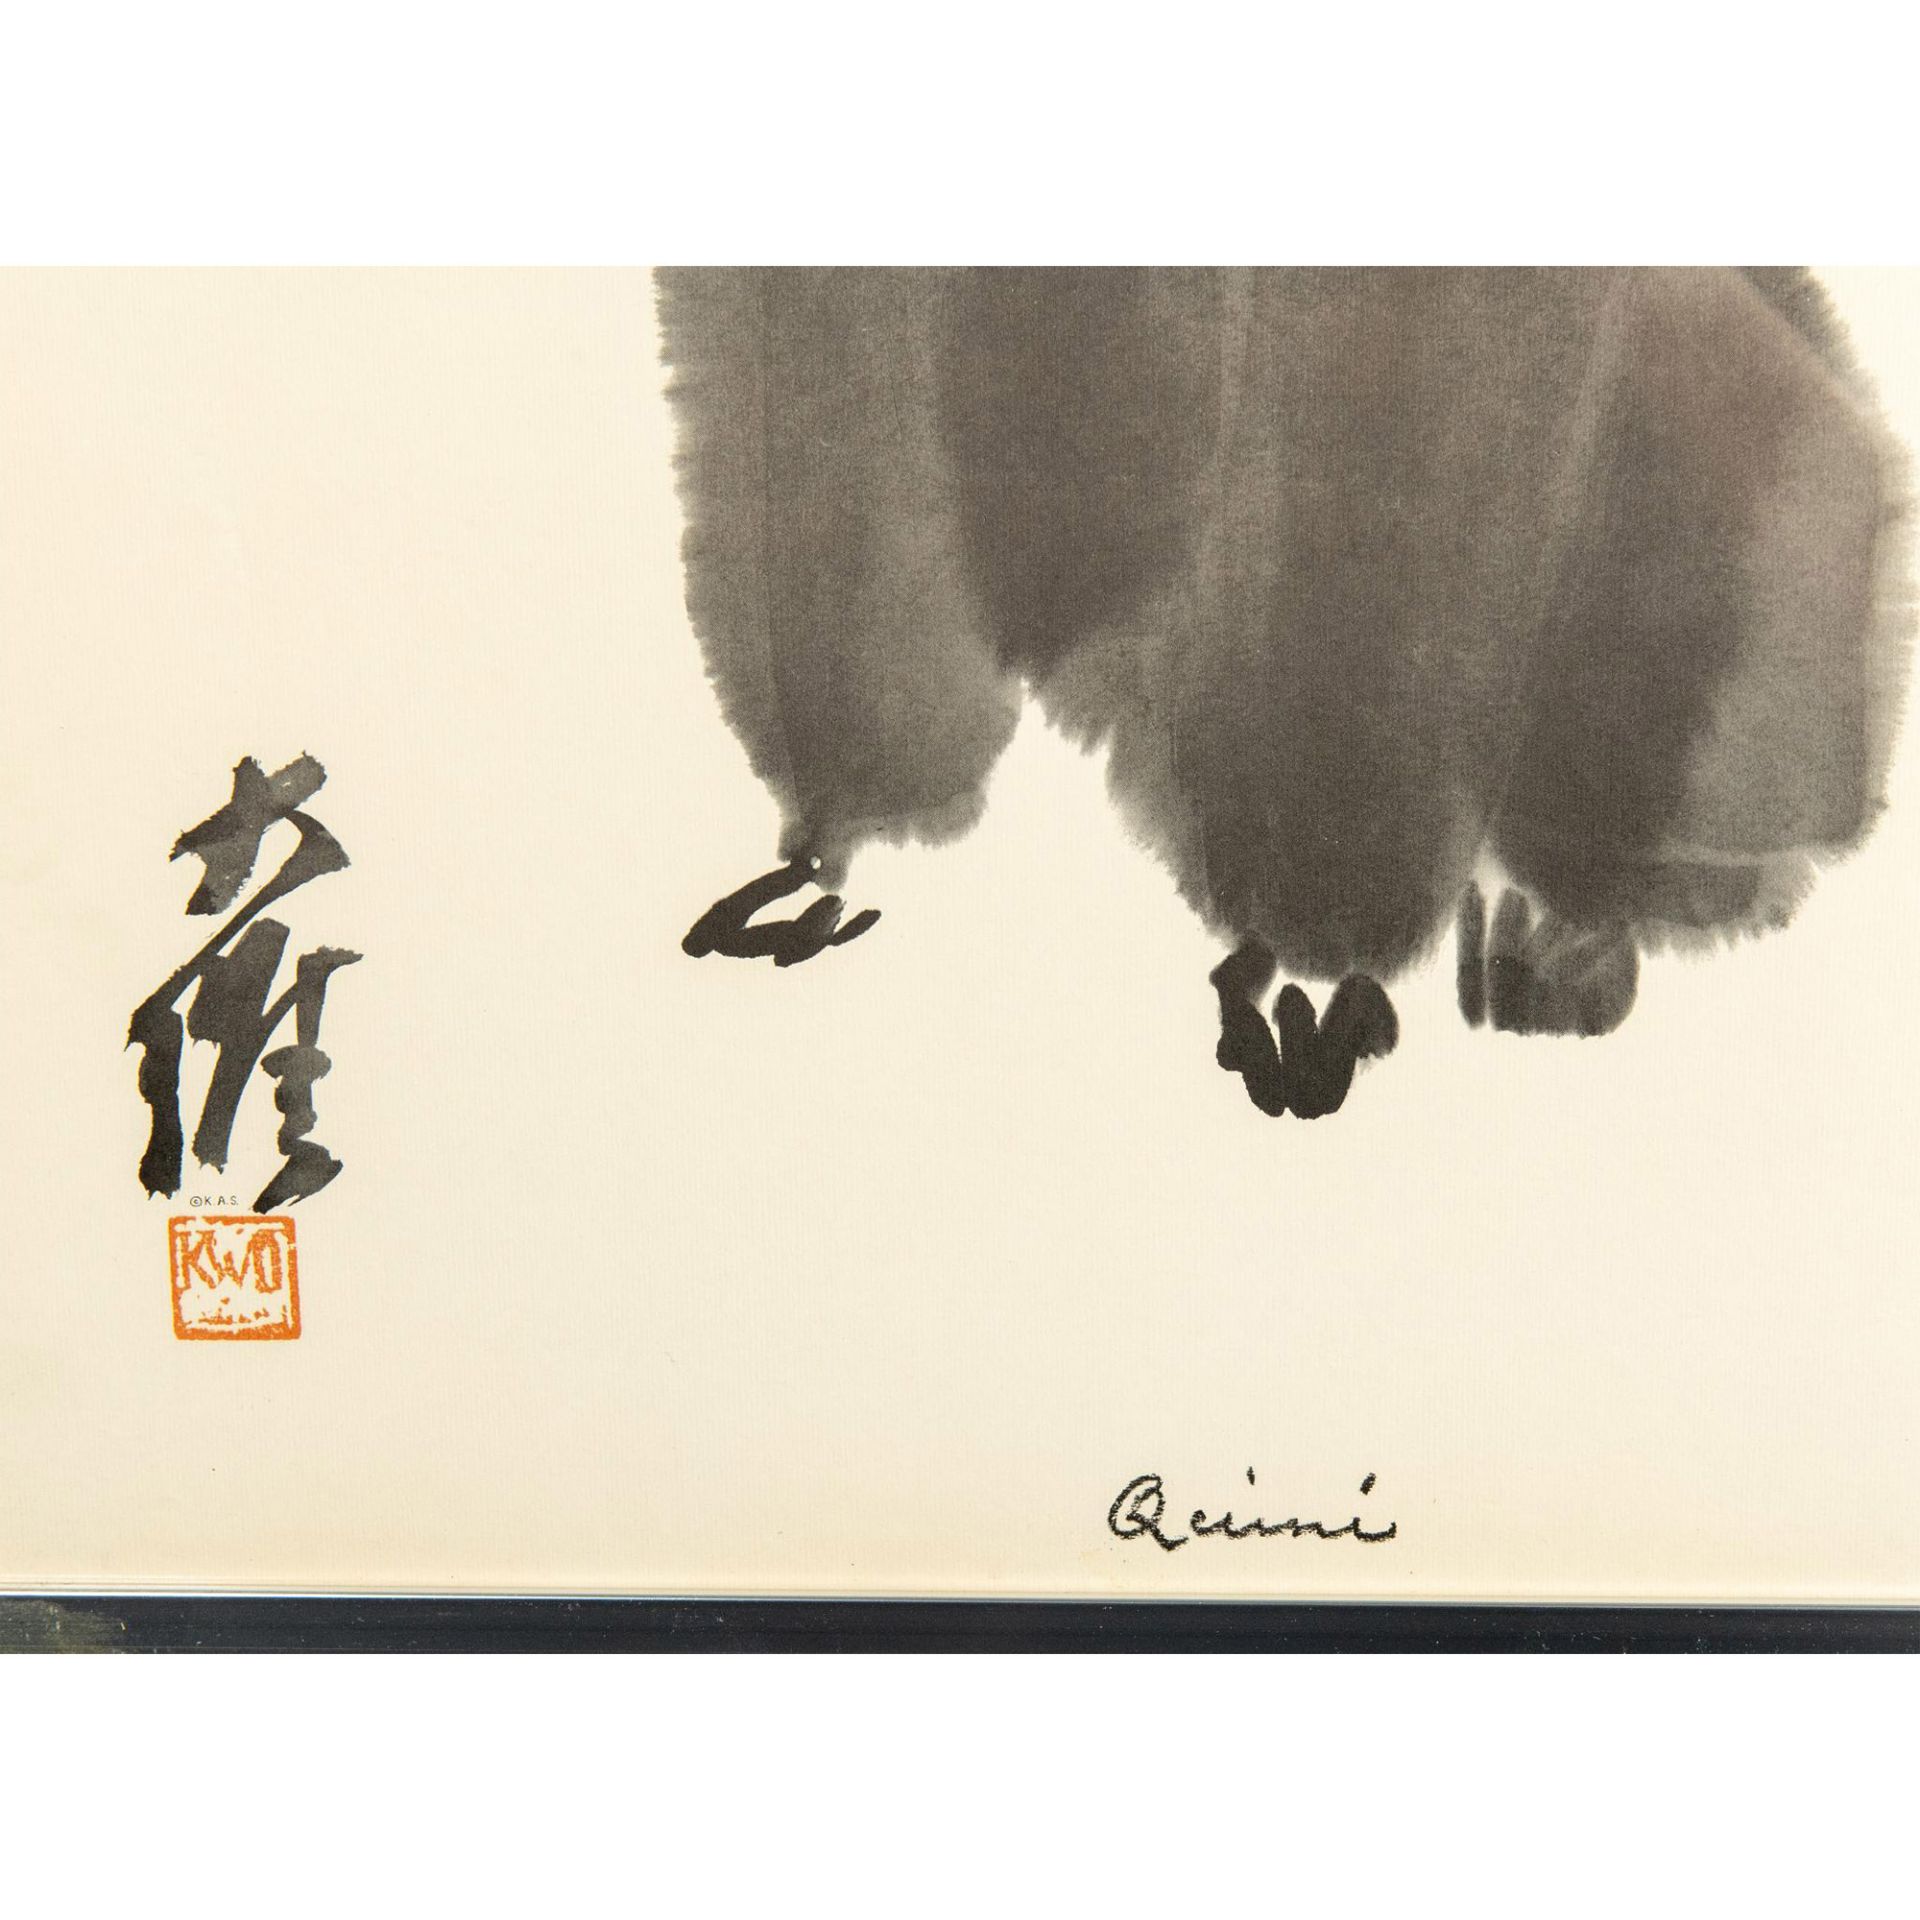 David Kwok, Monochrome Poster on Board, Qeini The Poodle - Image 3 of 4